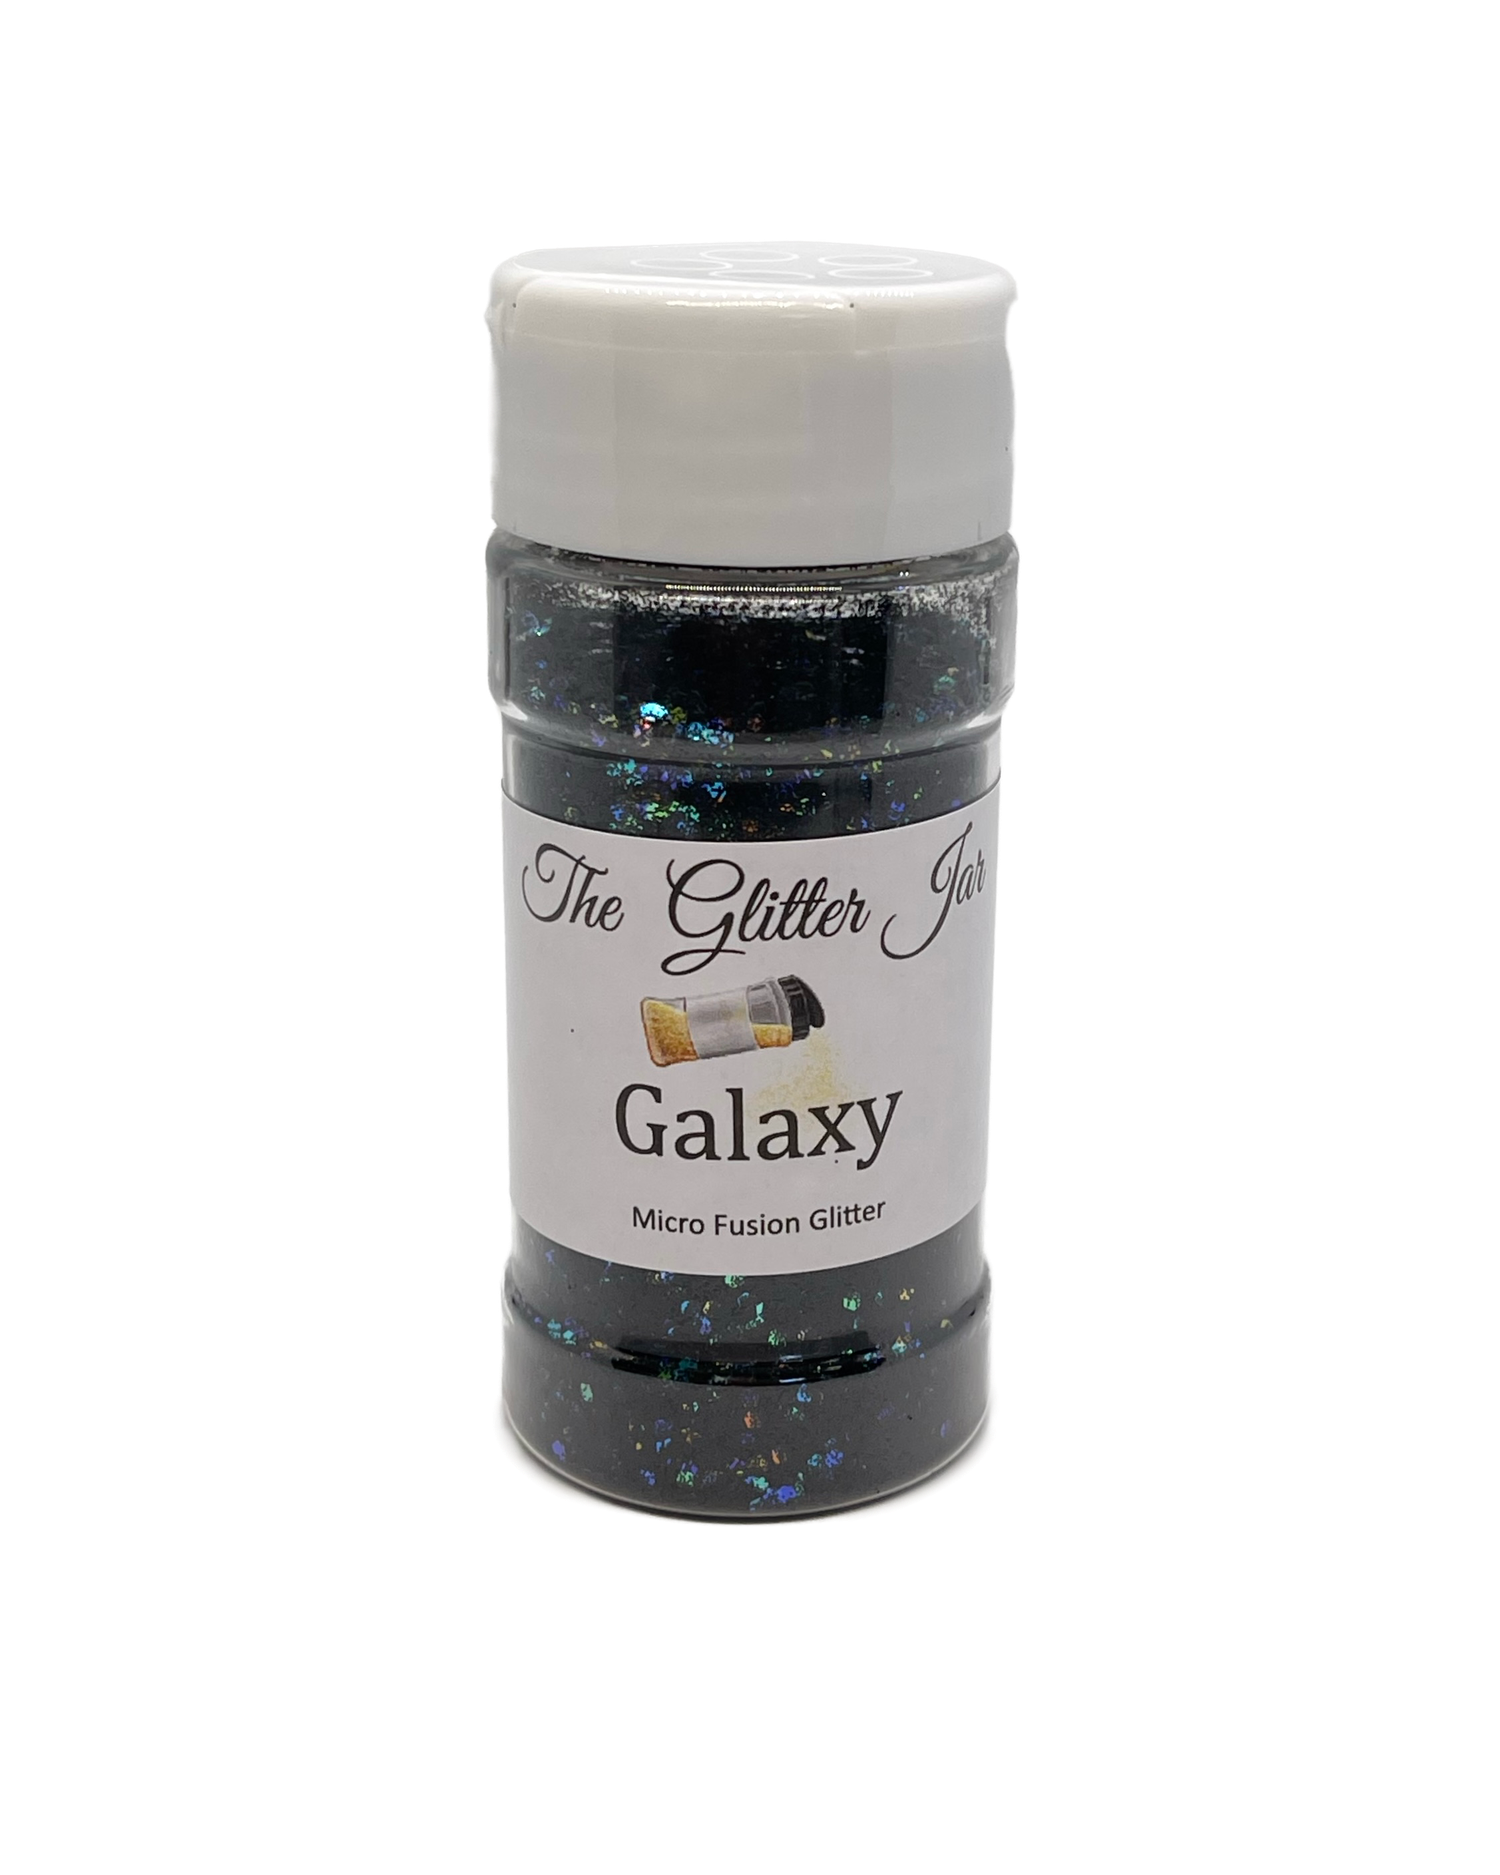 Galaxy Micro Fusion Glitter The Glitter Jar